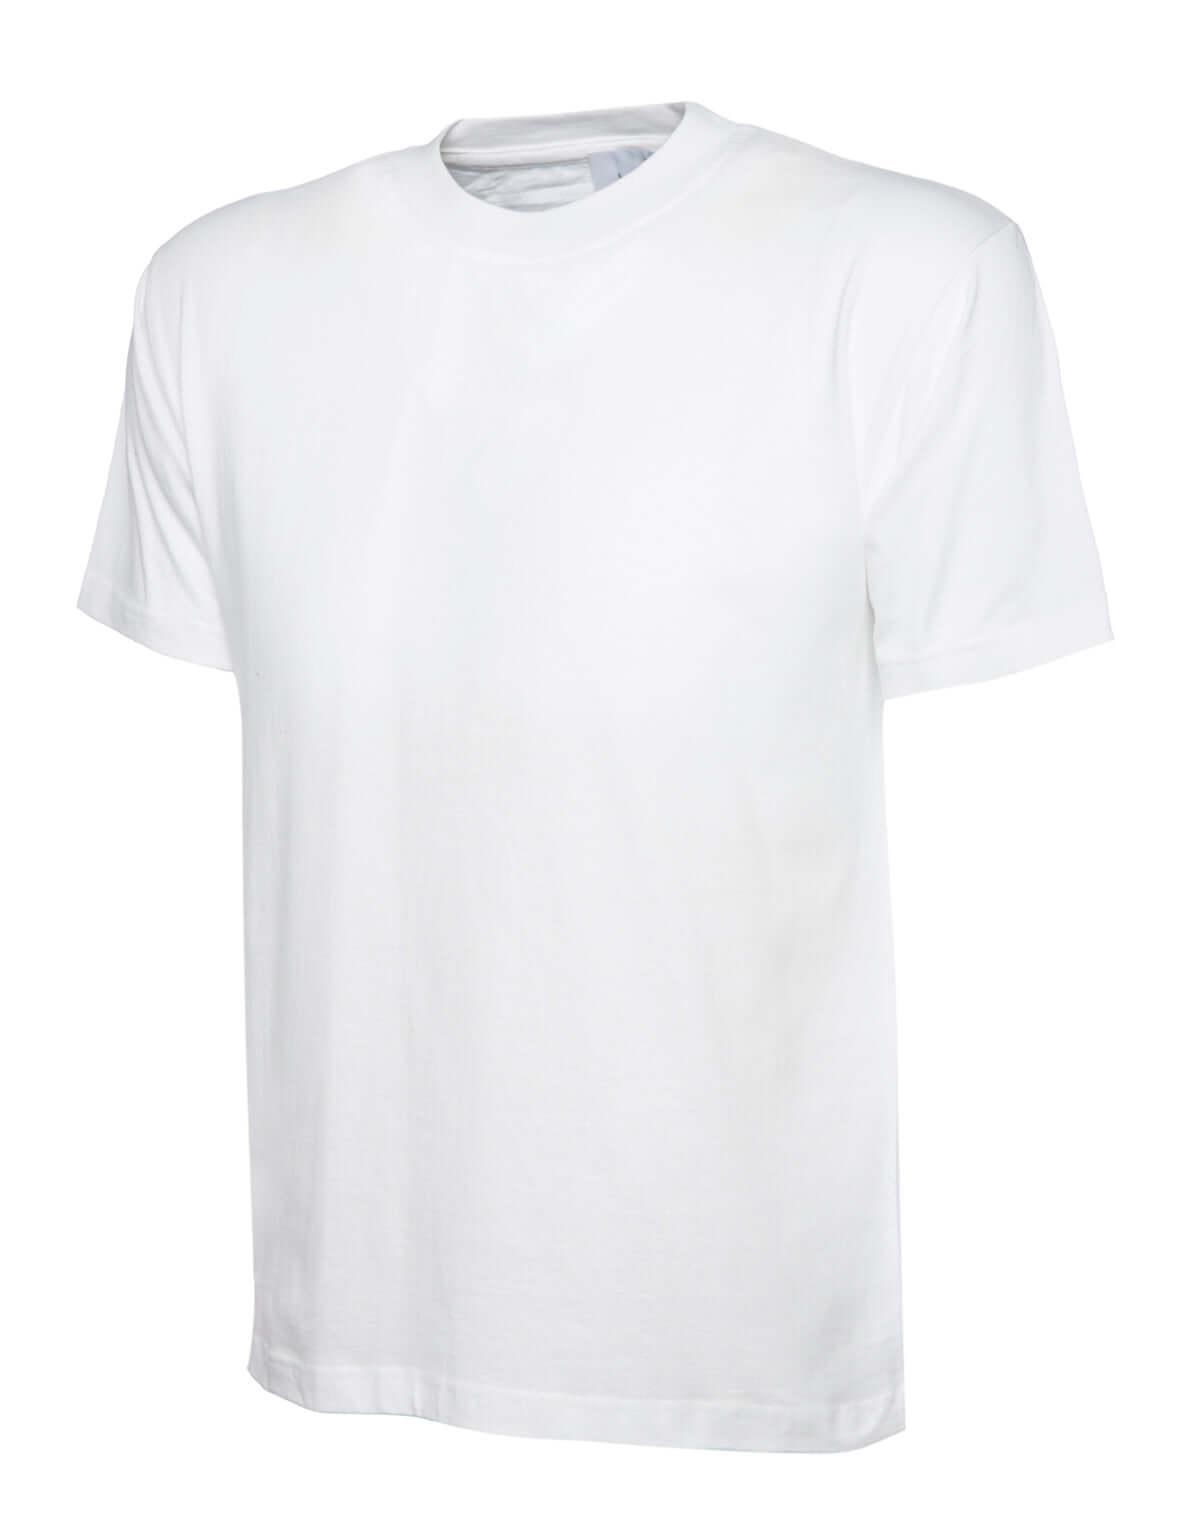 Pegasus Uniform Premium T-shirt - White